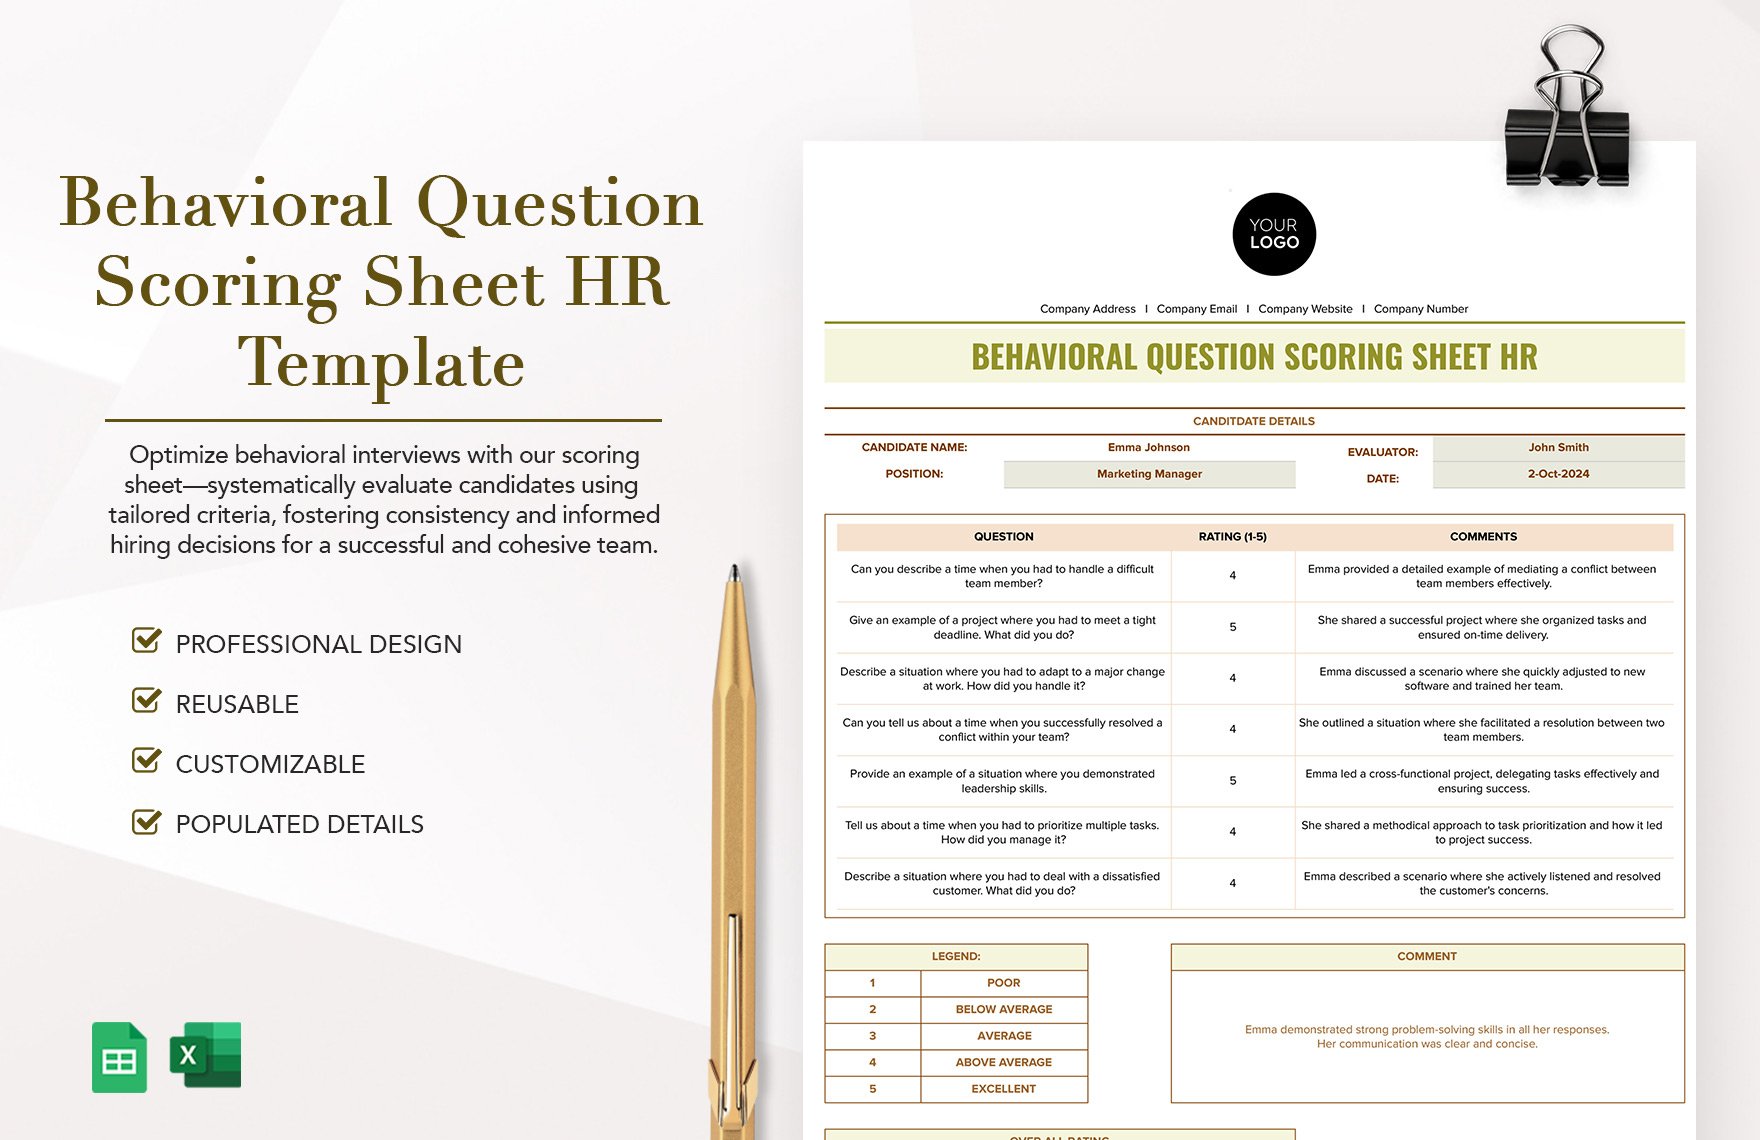 Behavioral Question Scoring Sheet HR Template